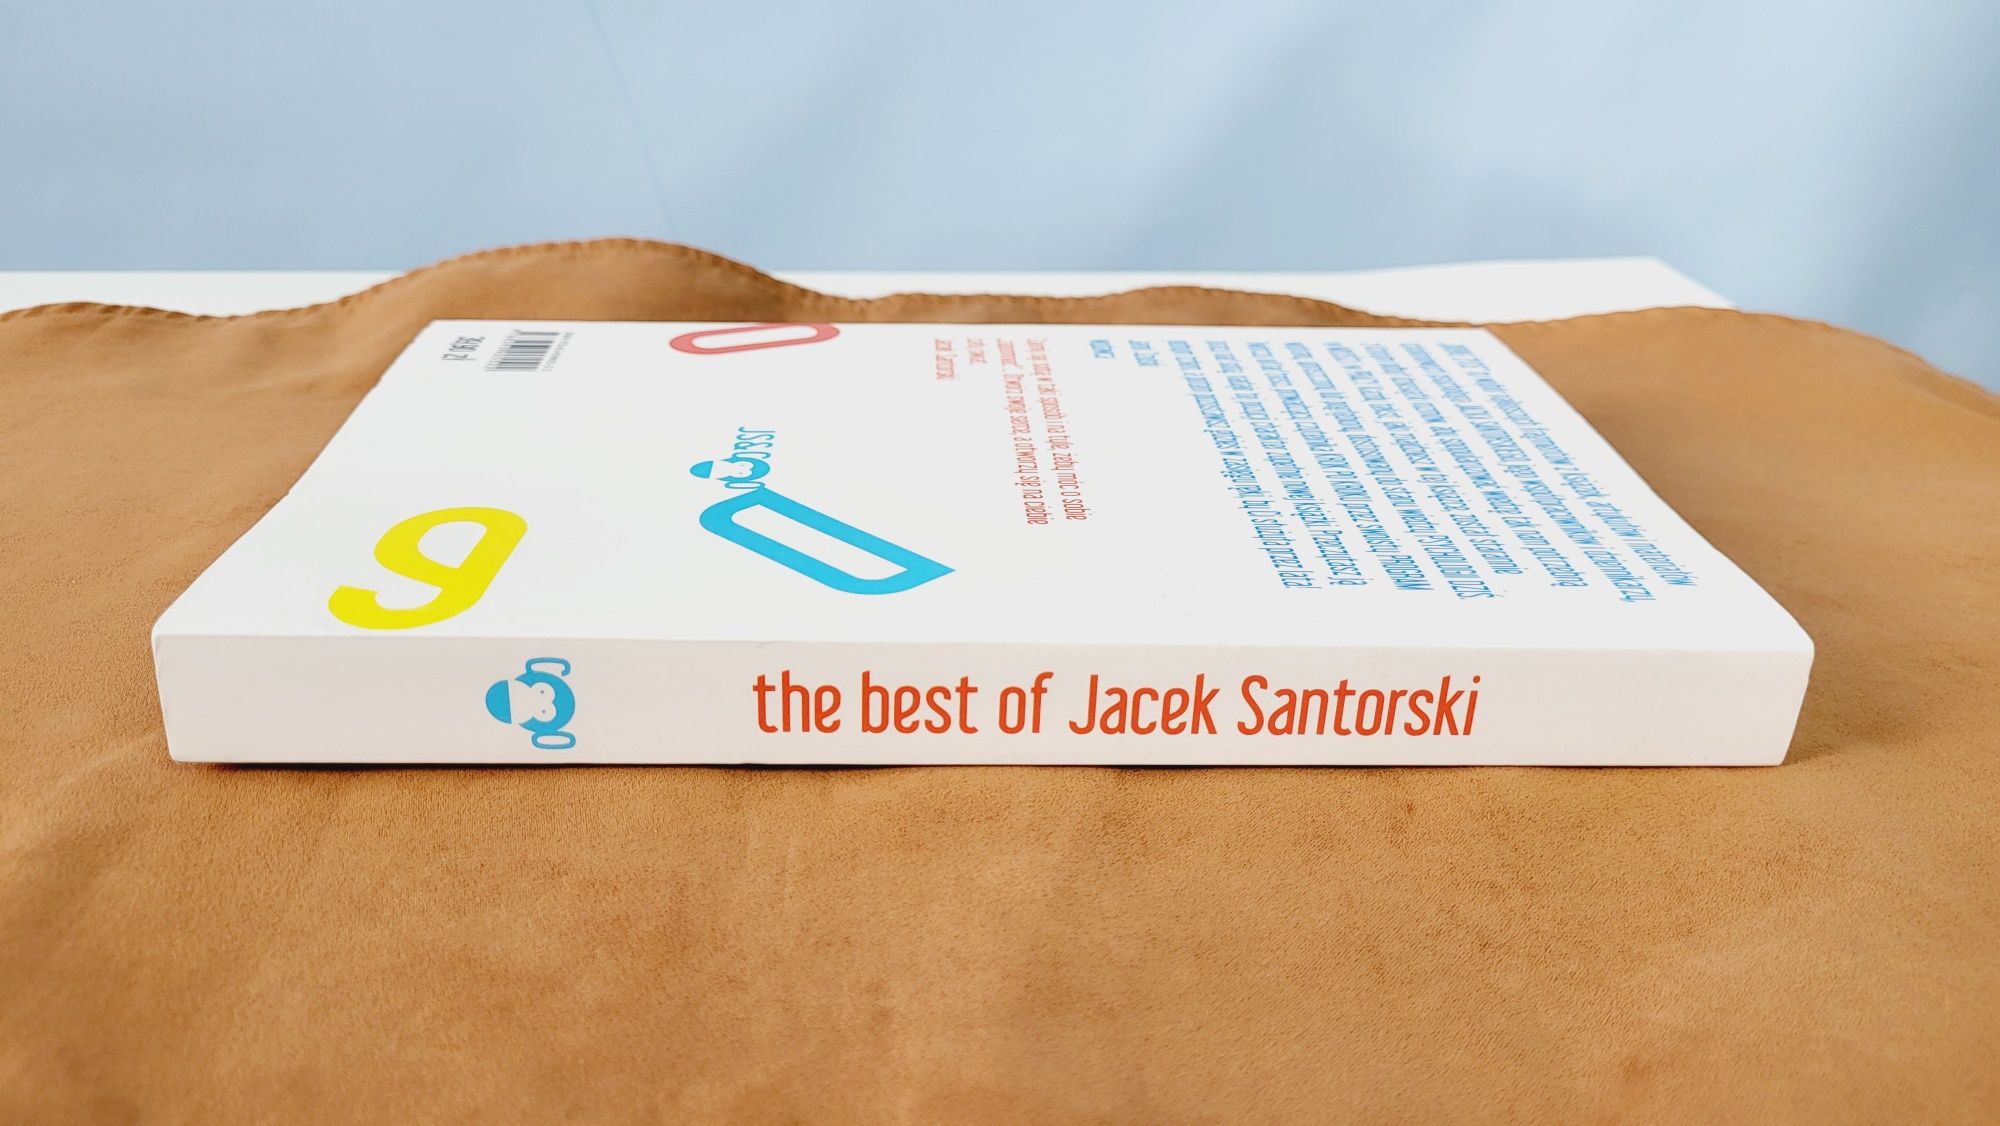 Dobre życie the Best of Jacek Santorski  psychologia